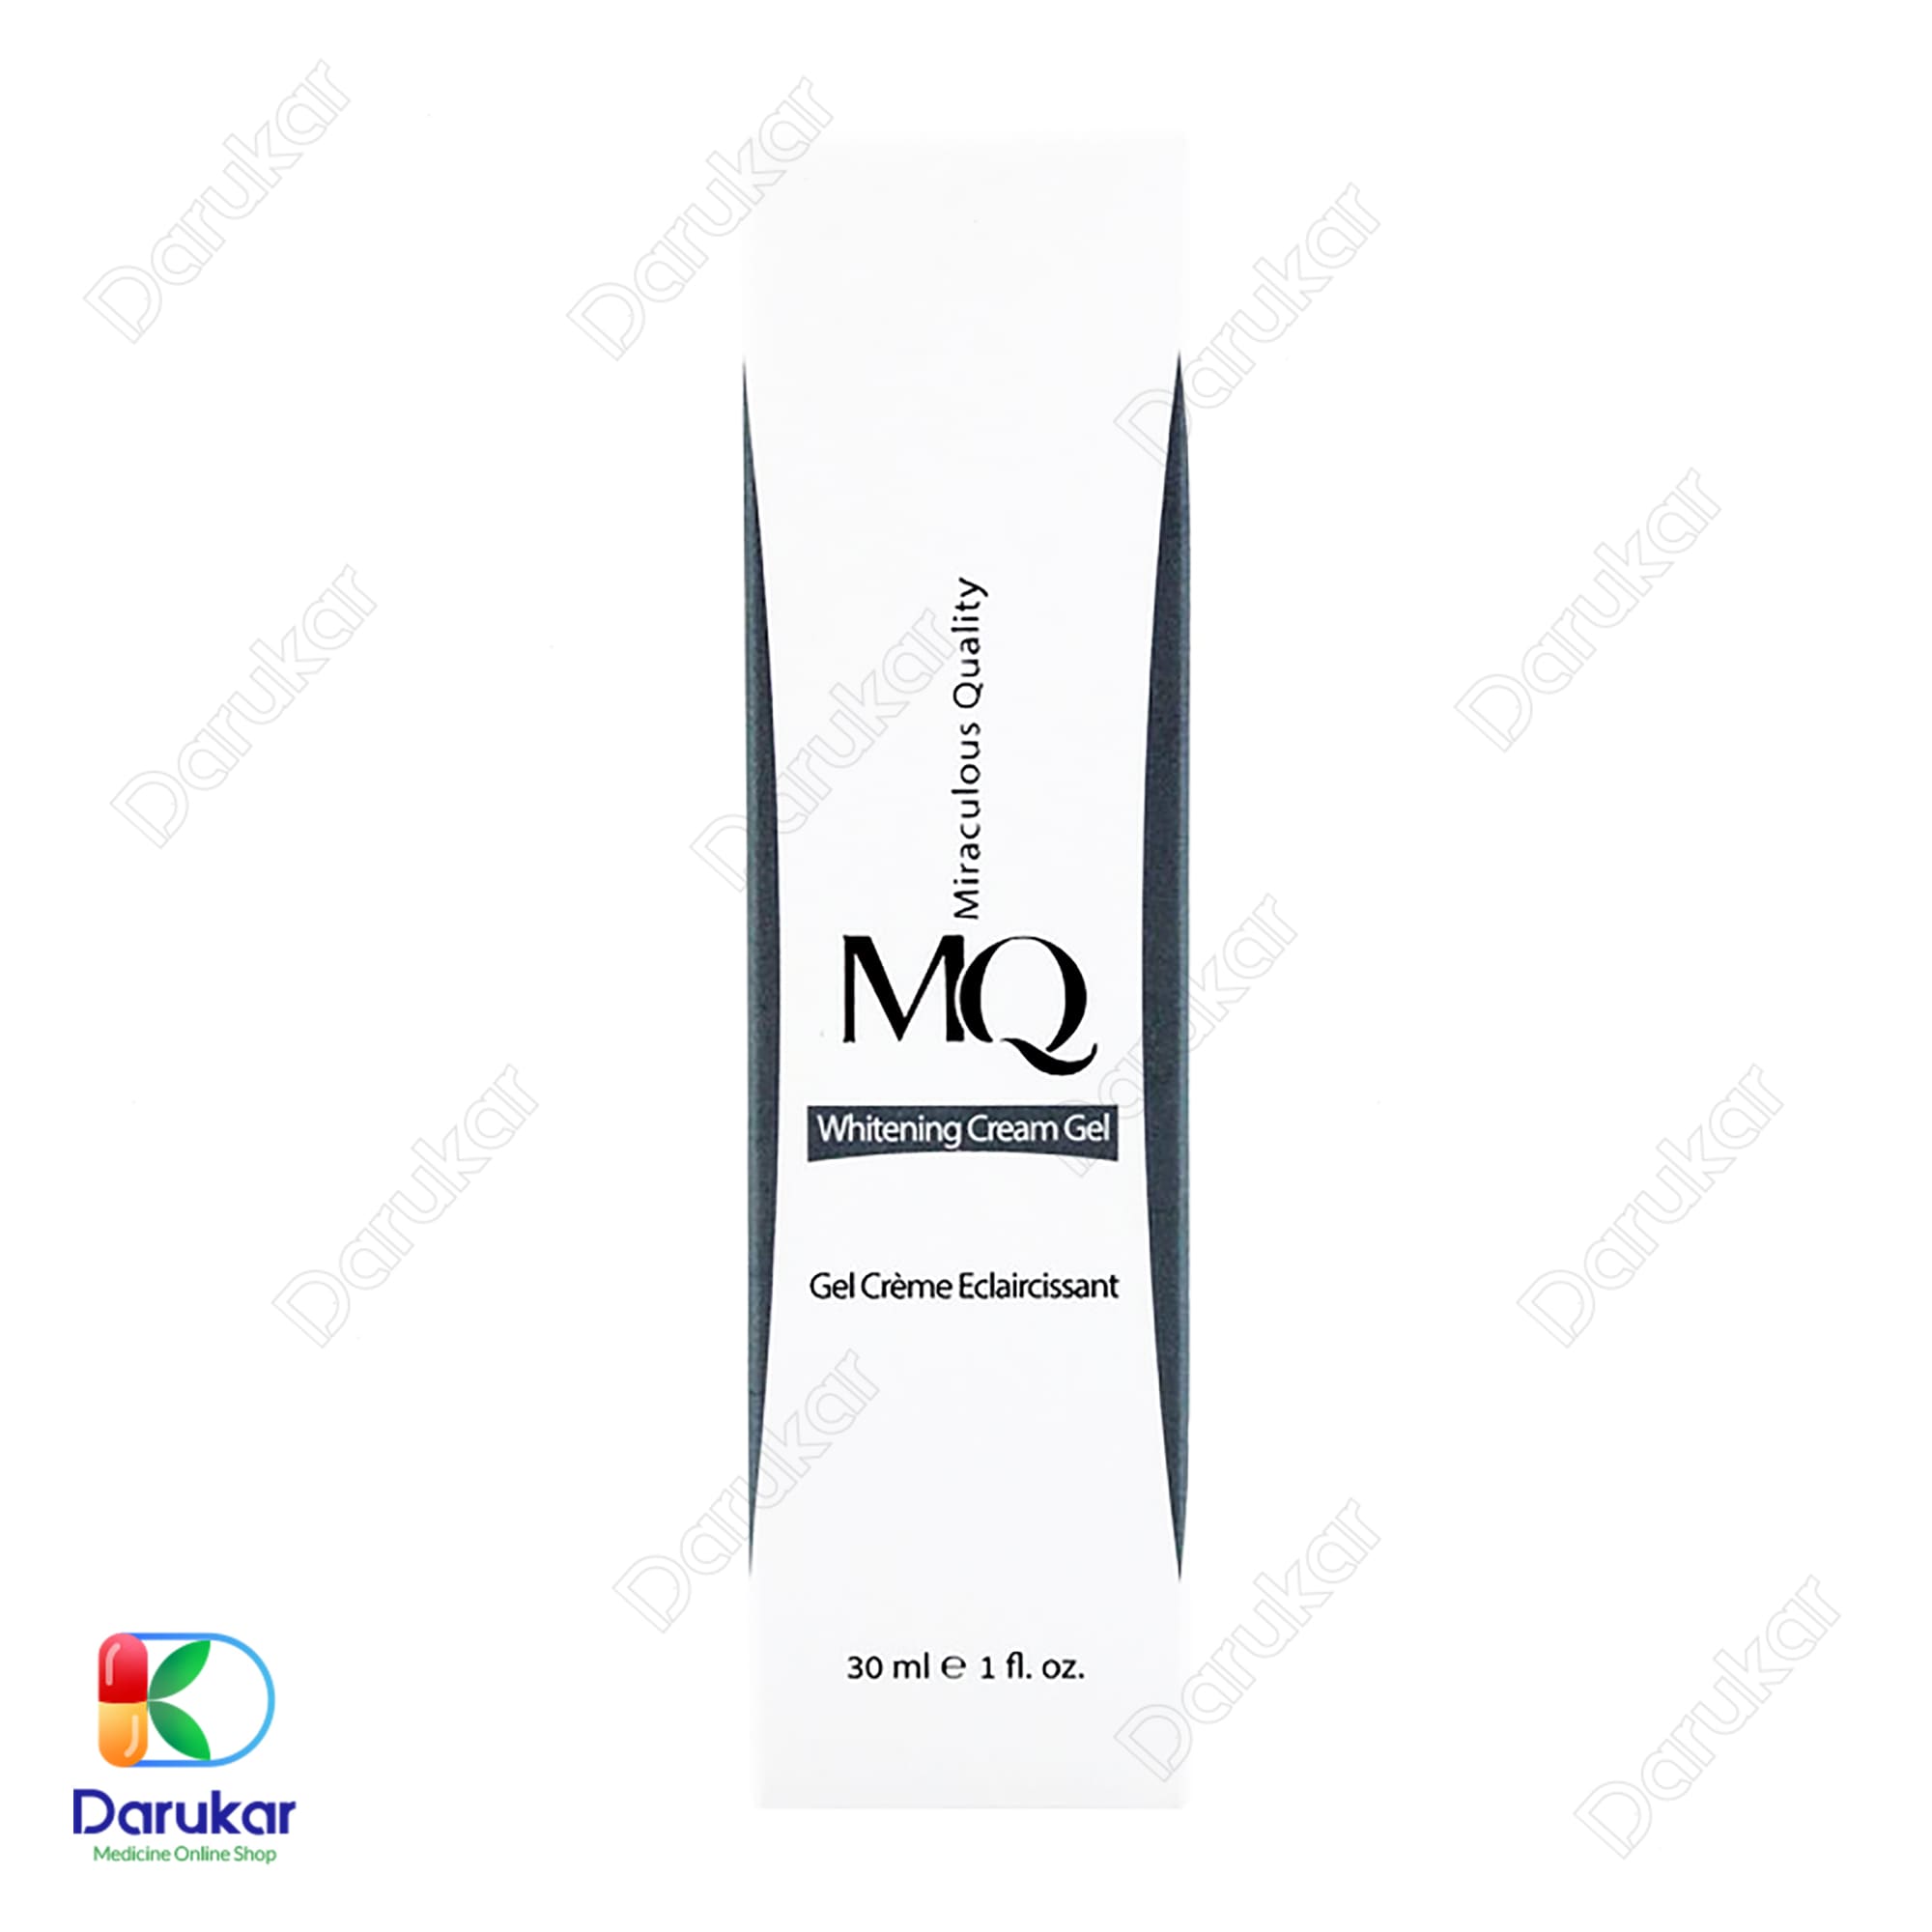 MQ Whitening Cream Gel 1